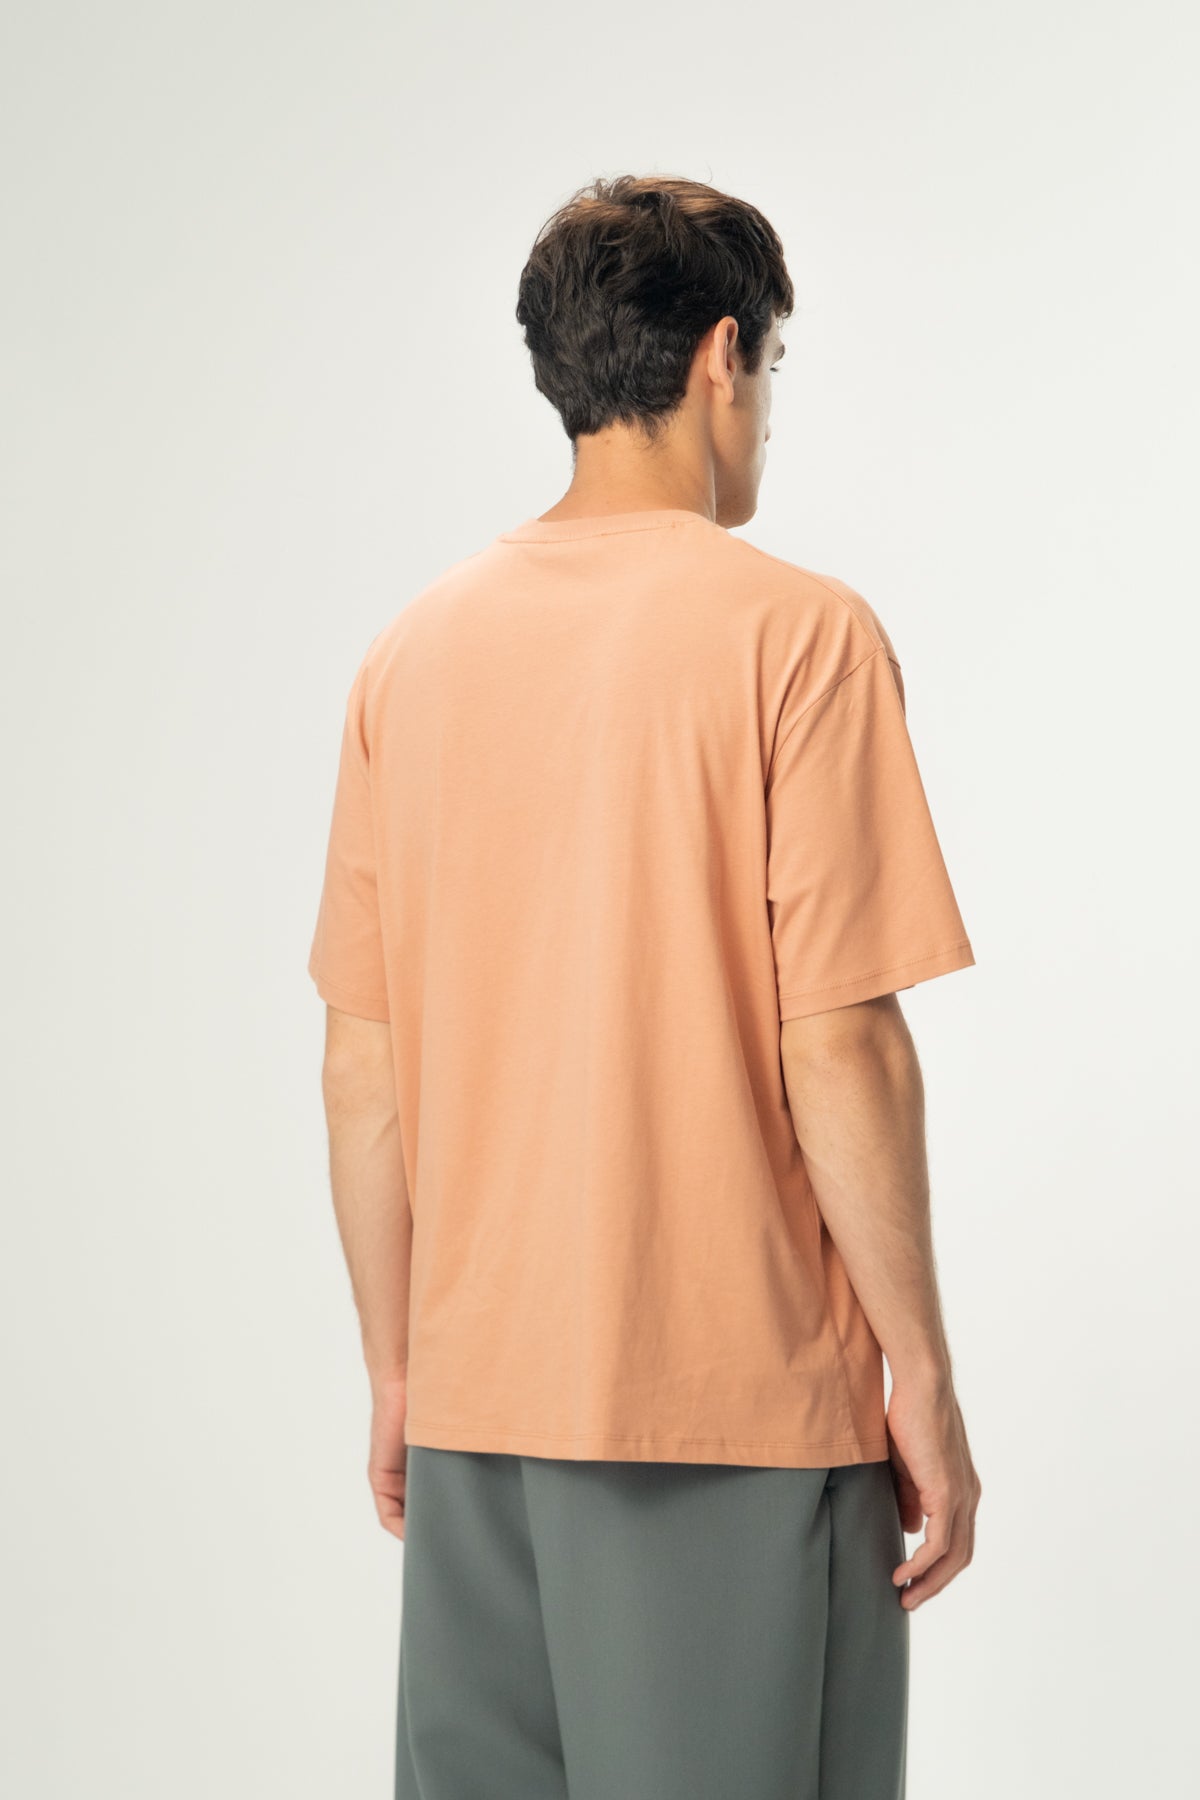 Kızıl Tilki Soft Supreme Oversize T-shirt - Toprak Rengi